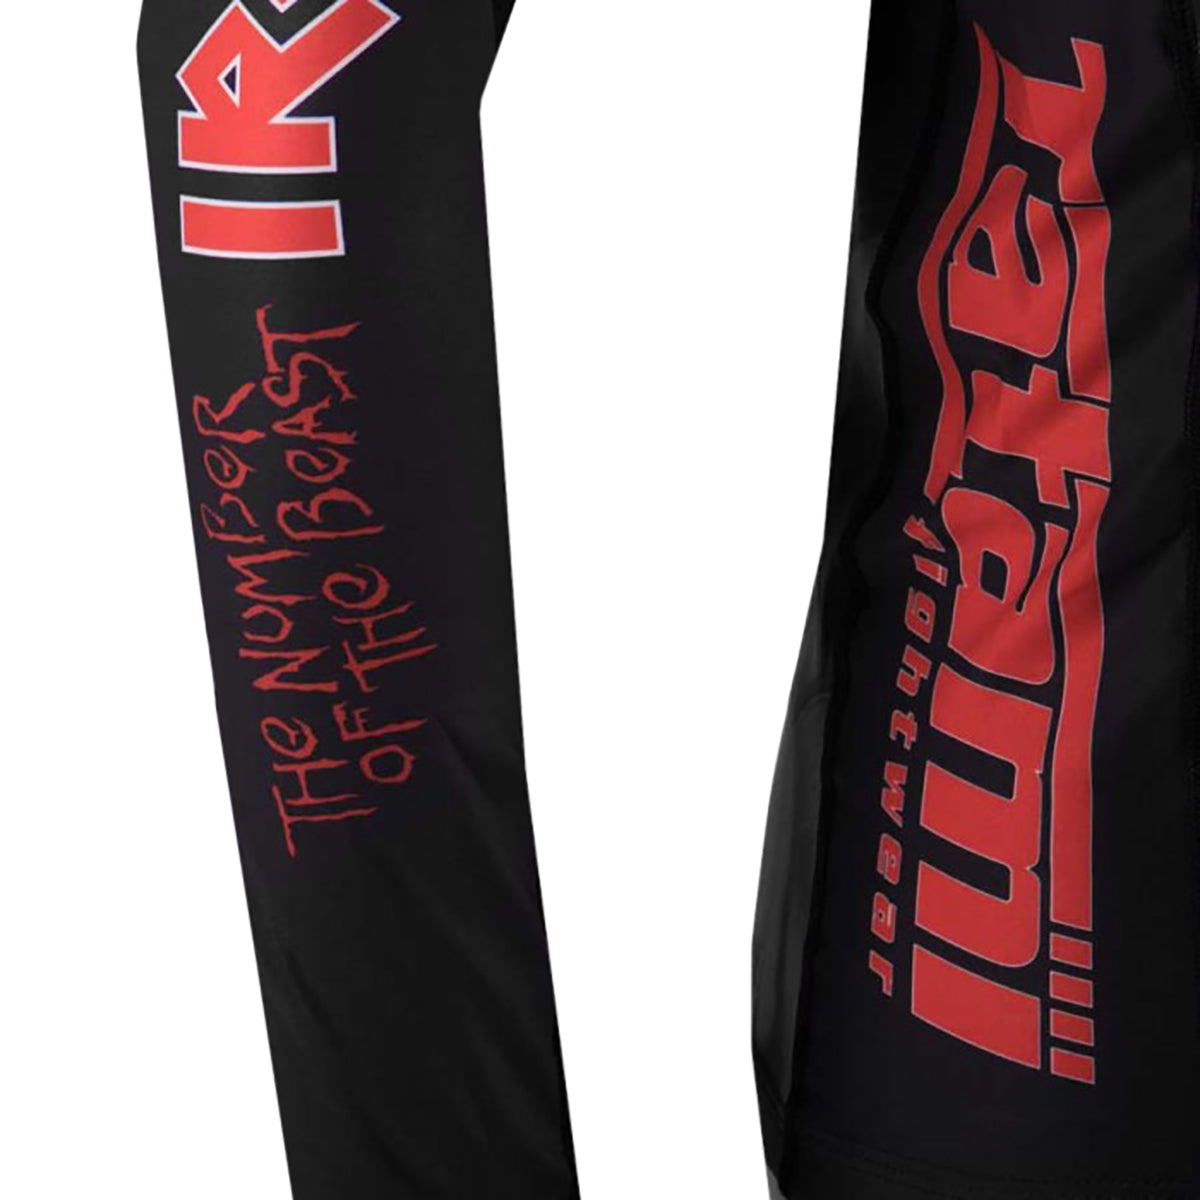 Tatami x Iron Maiden Kid's Number of the Beast Long Sleeve BJJ Rashguard - Black Tatami Fightwear